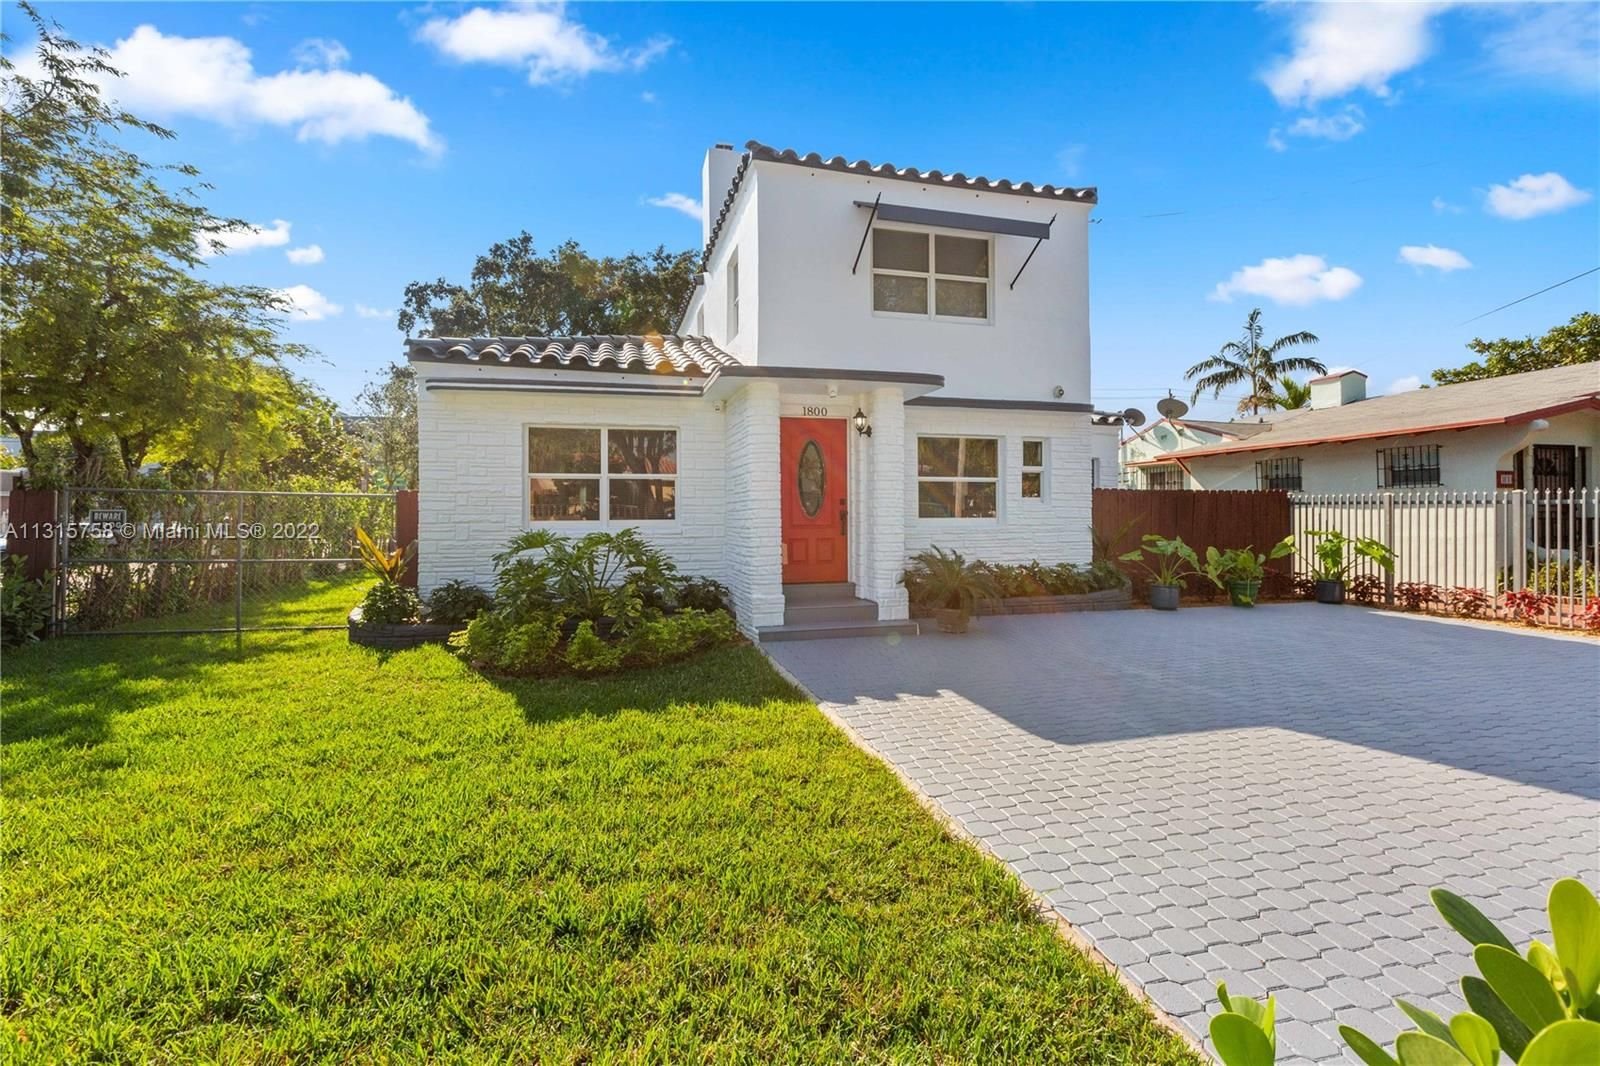 Real estate property located at 1800 24th Ter, Miami-Dade County, Miami, FL